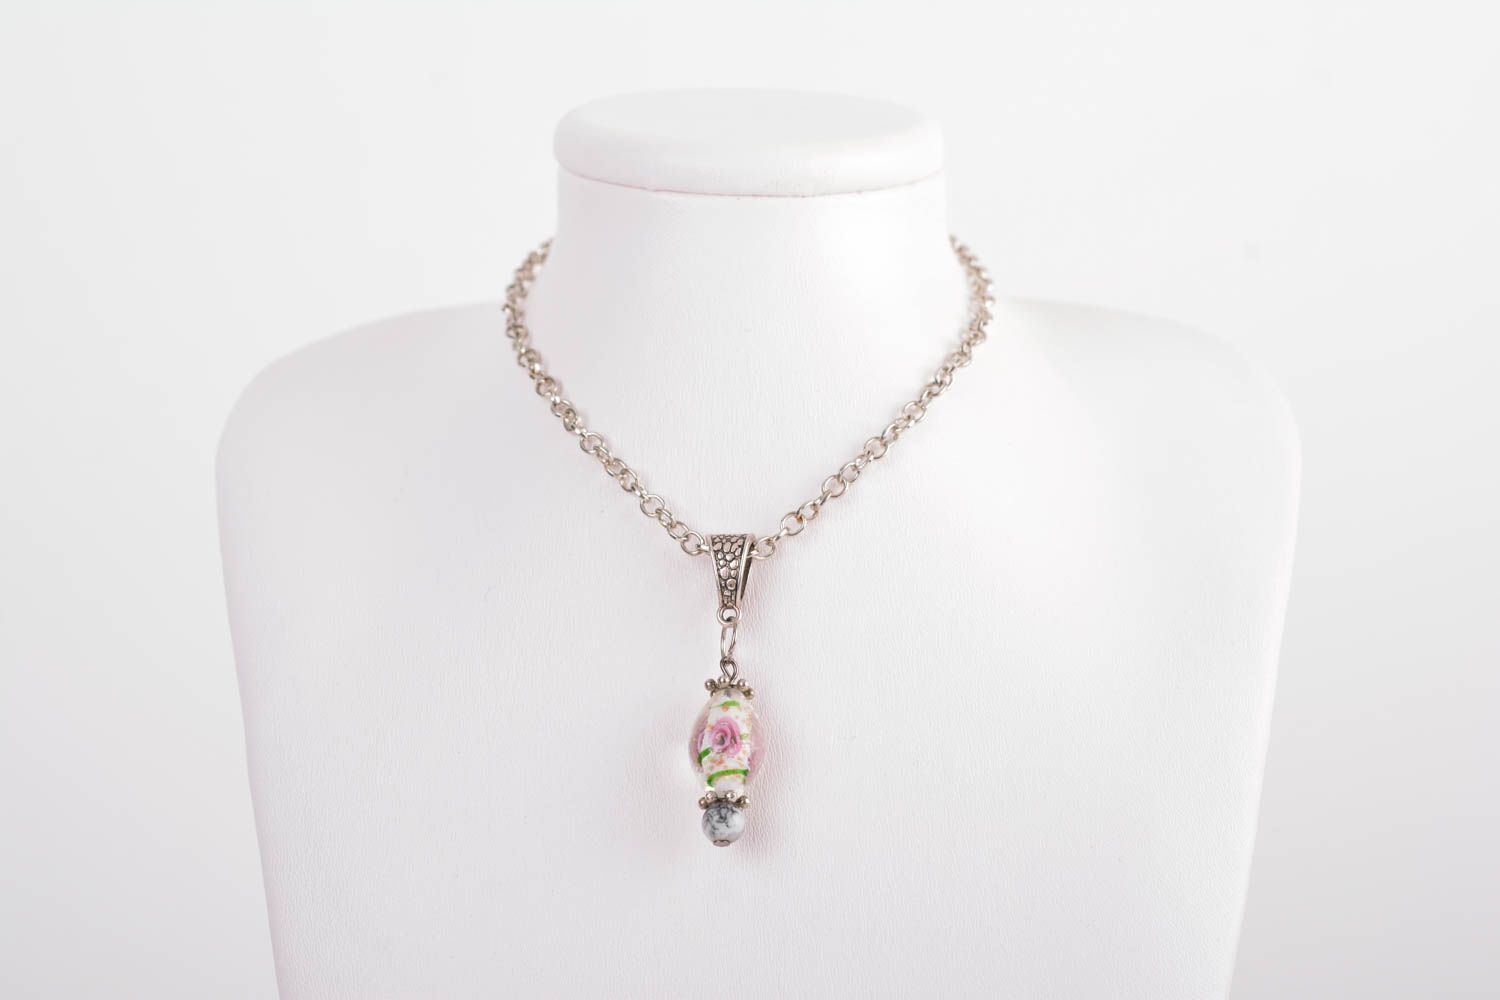 Handmade pendant glass pendant unusual jewelry designer accessory gift ideas photo 4